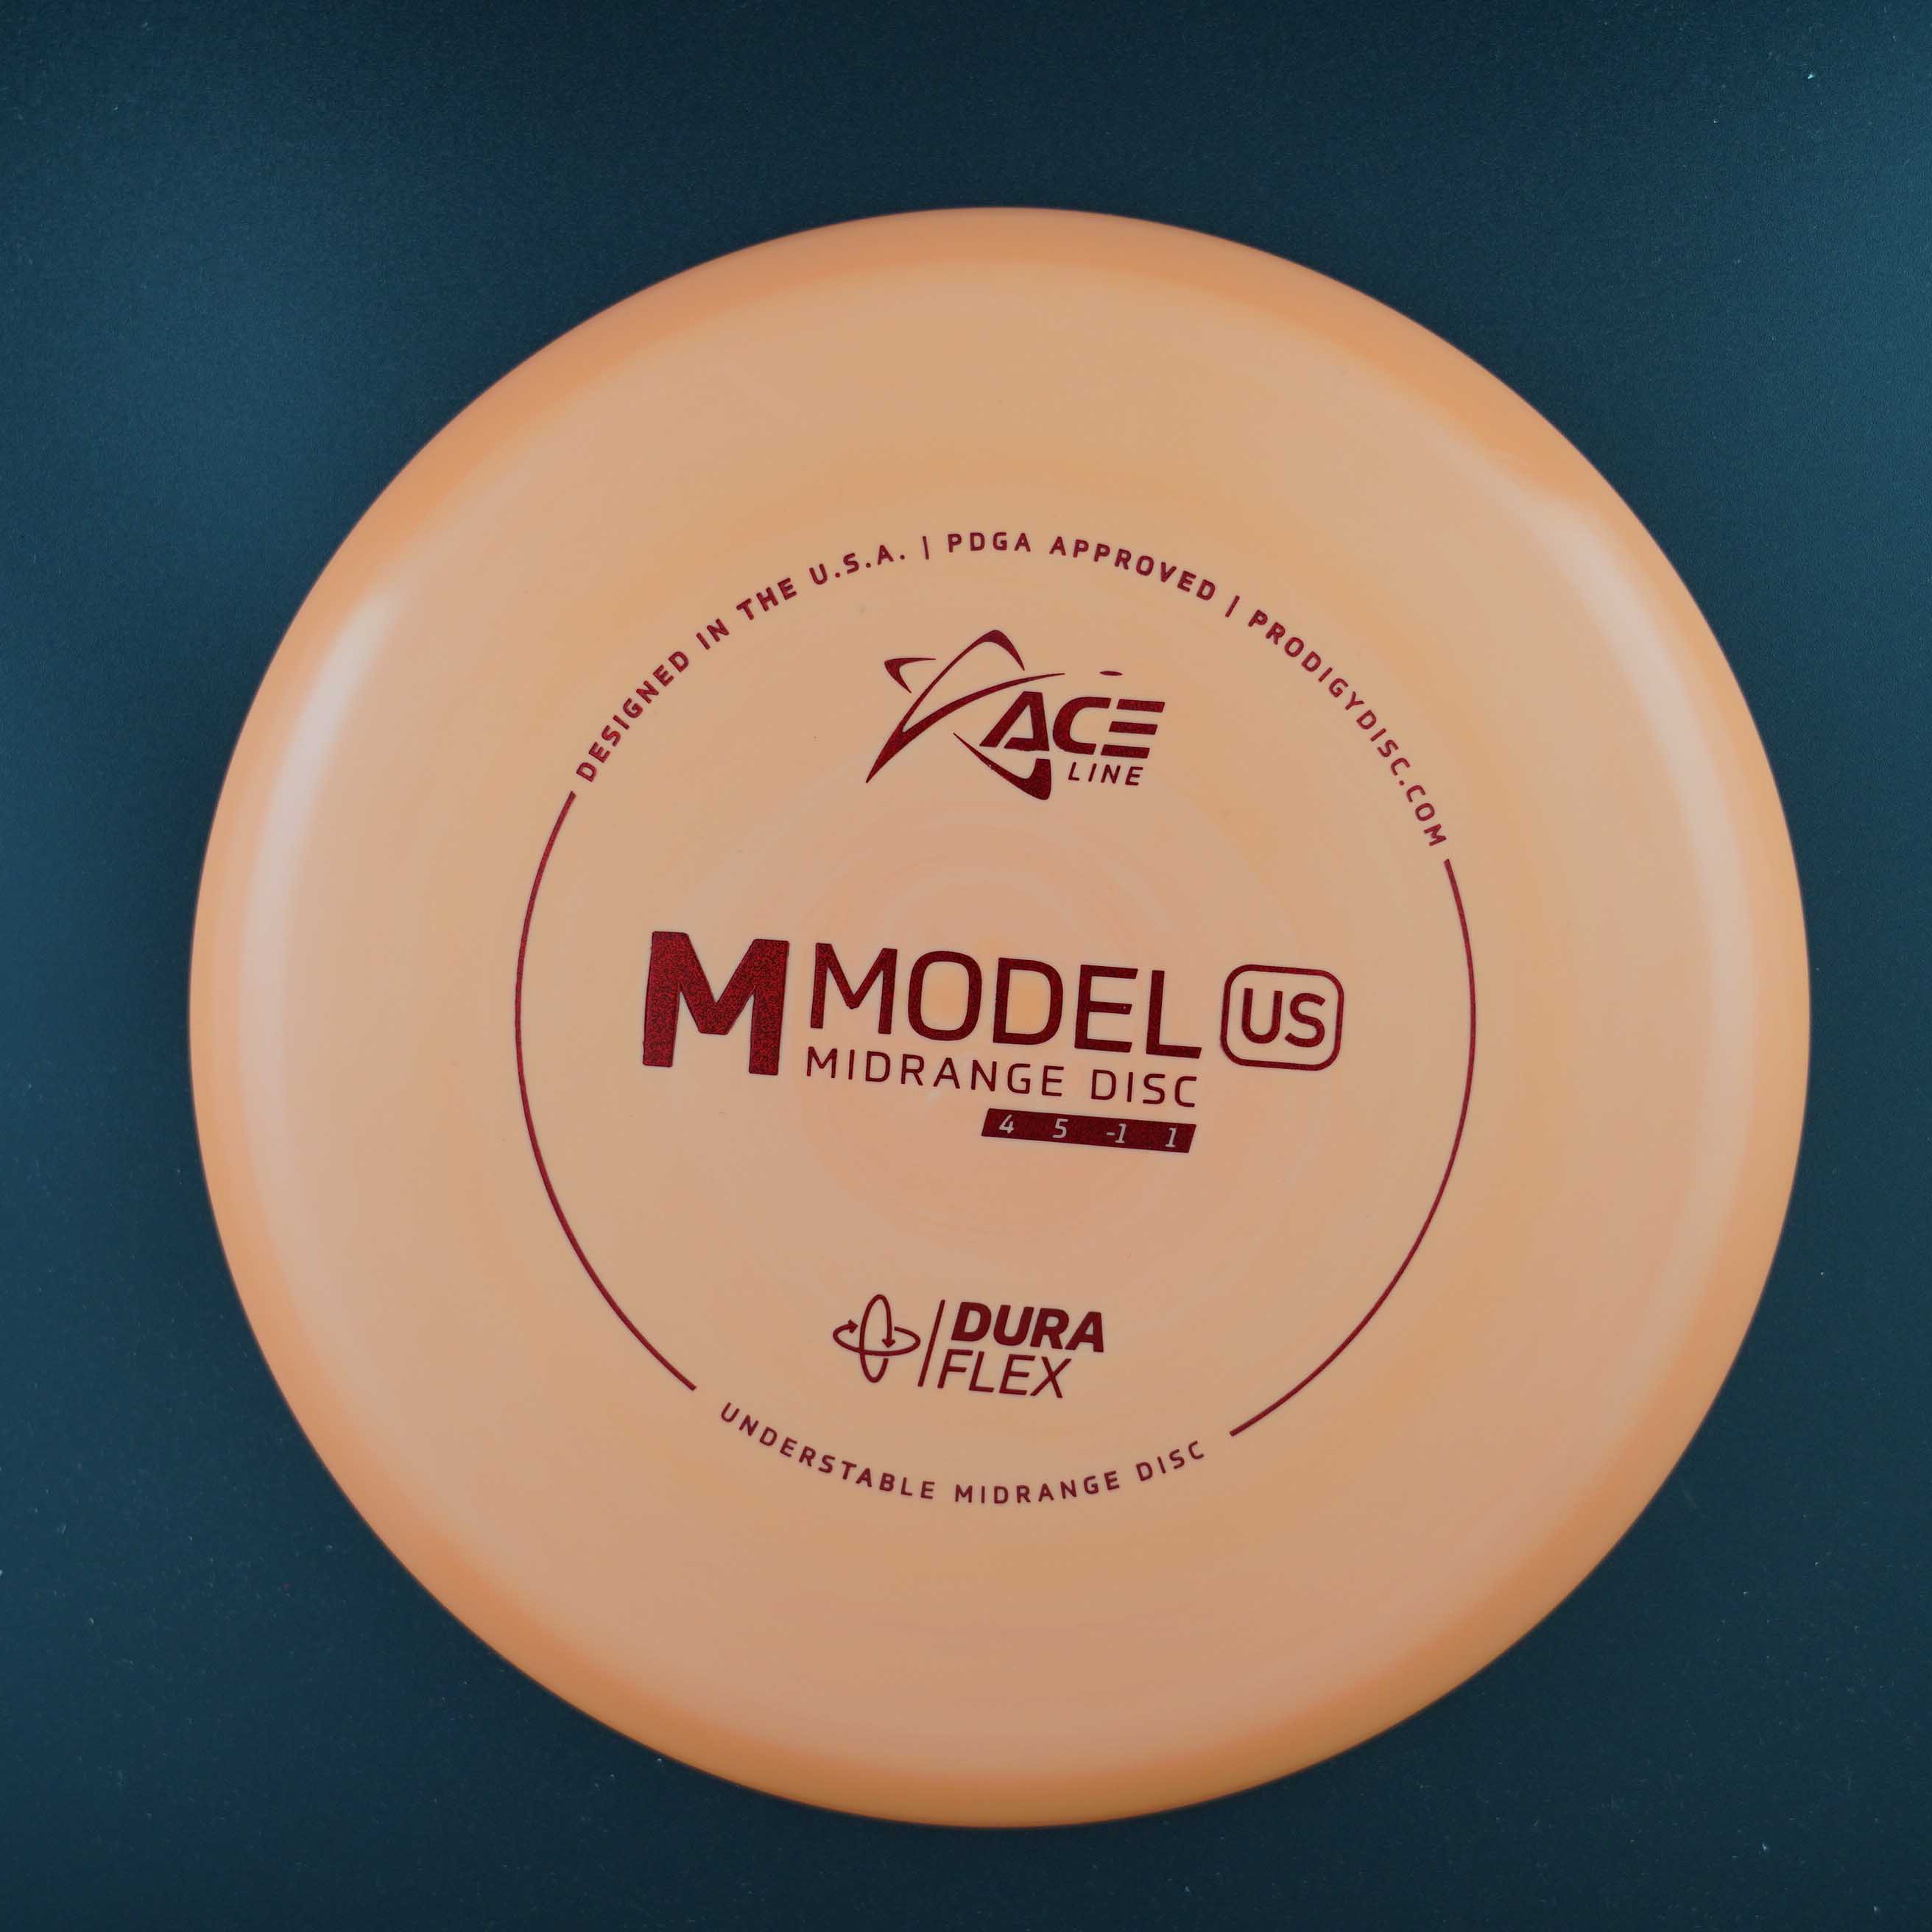 M Model US